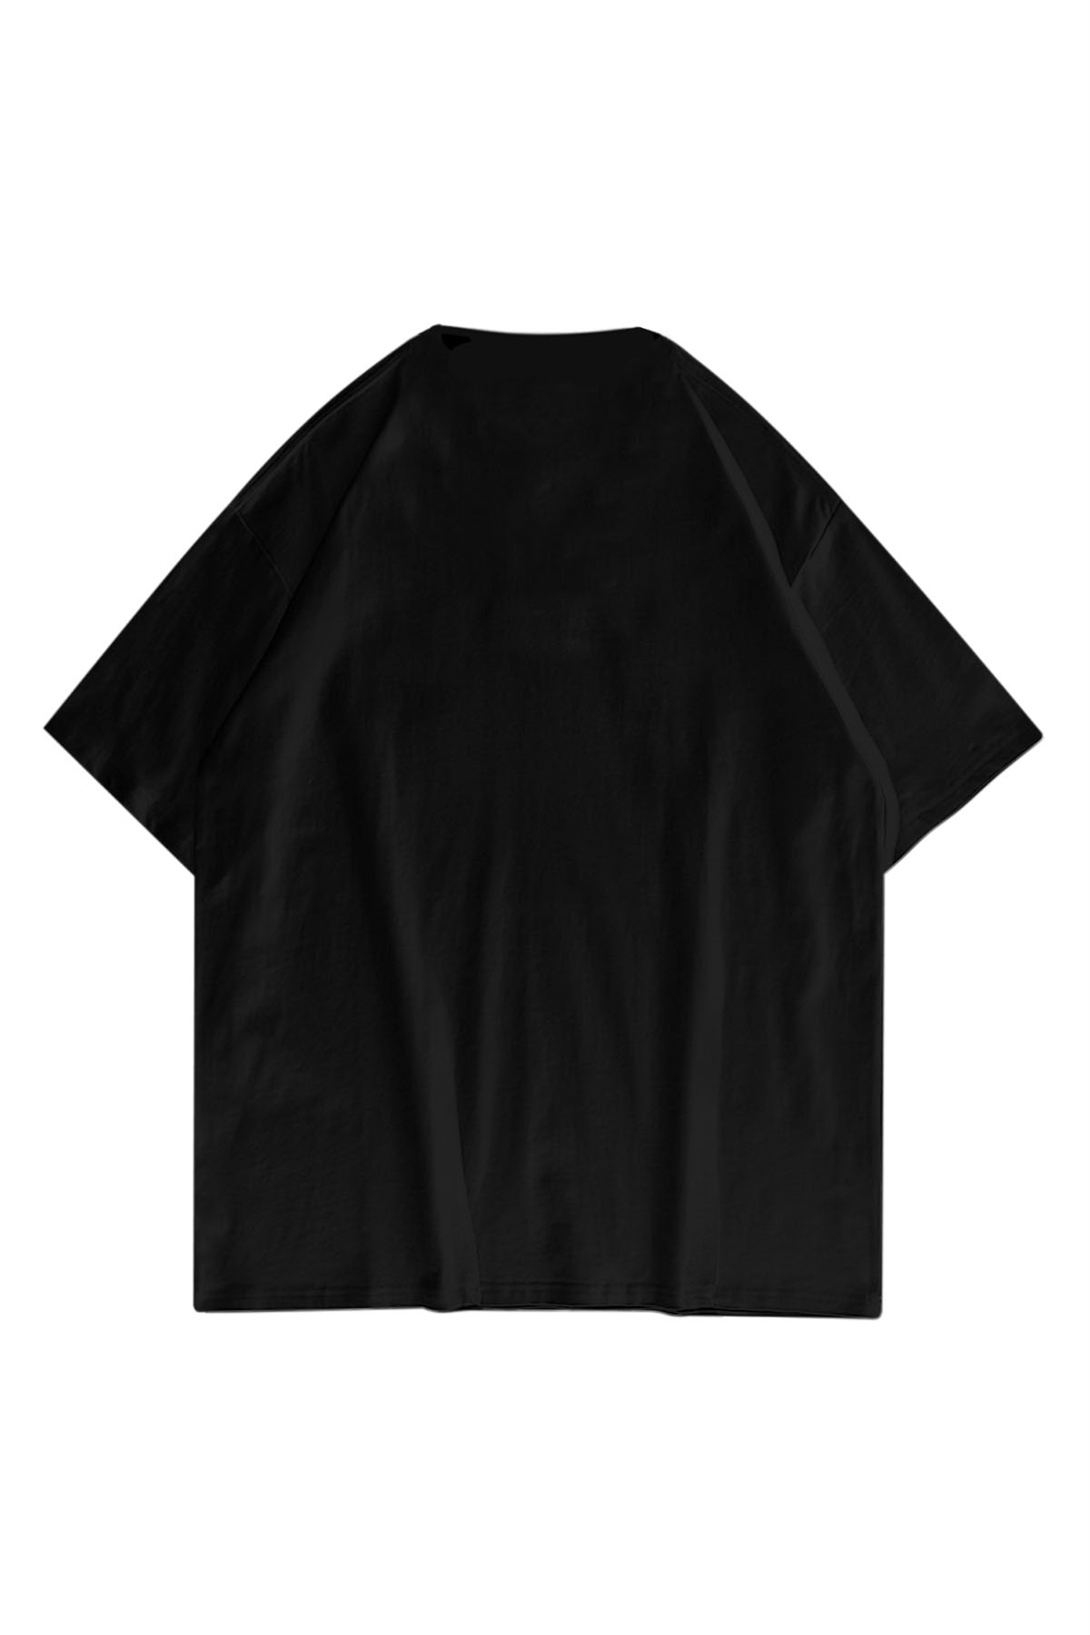 Trendiz Unisex Drew Canavar Siyah  Tshirt